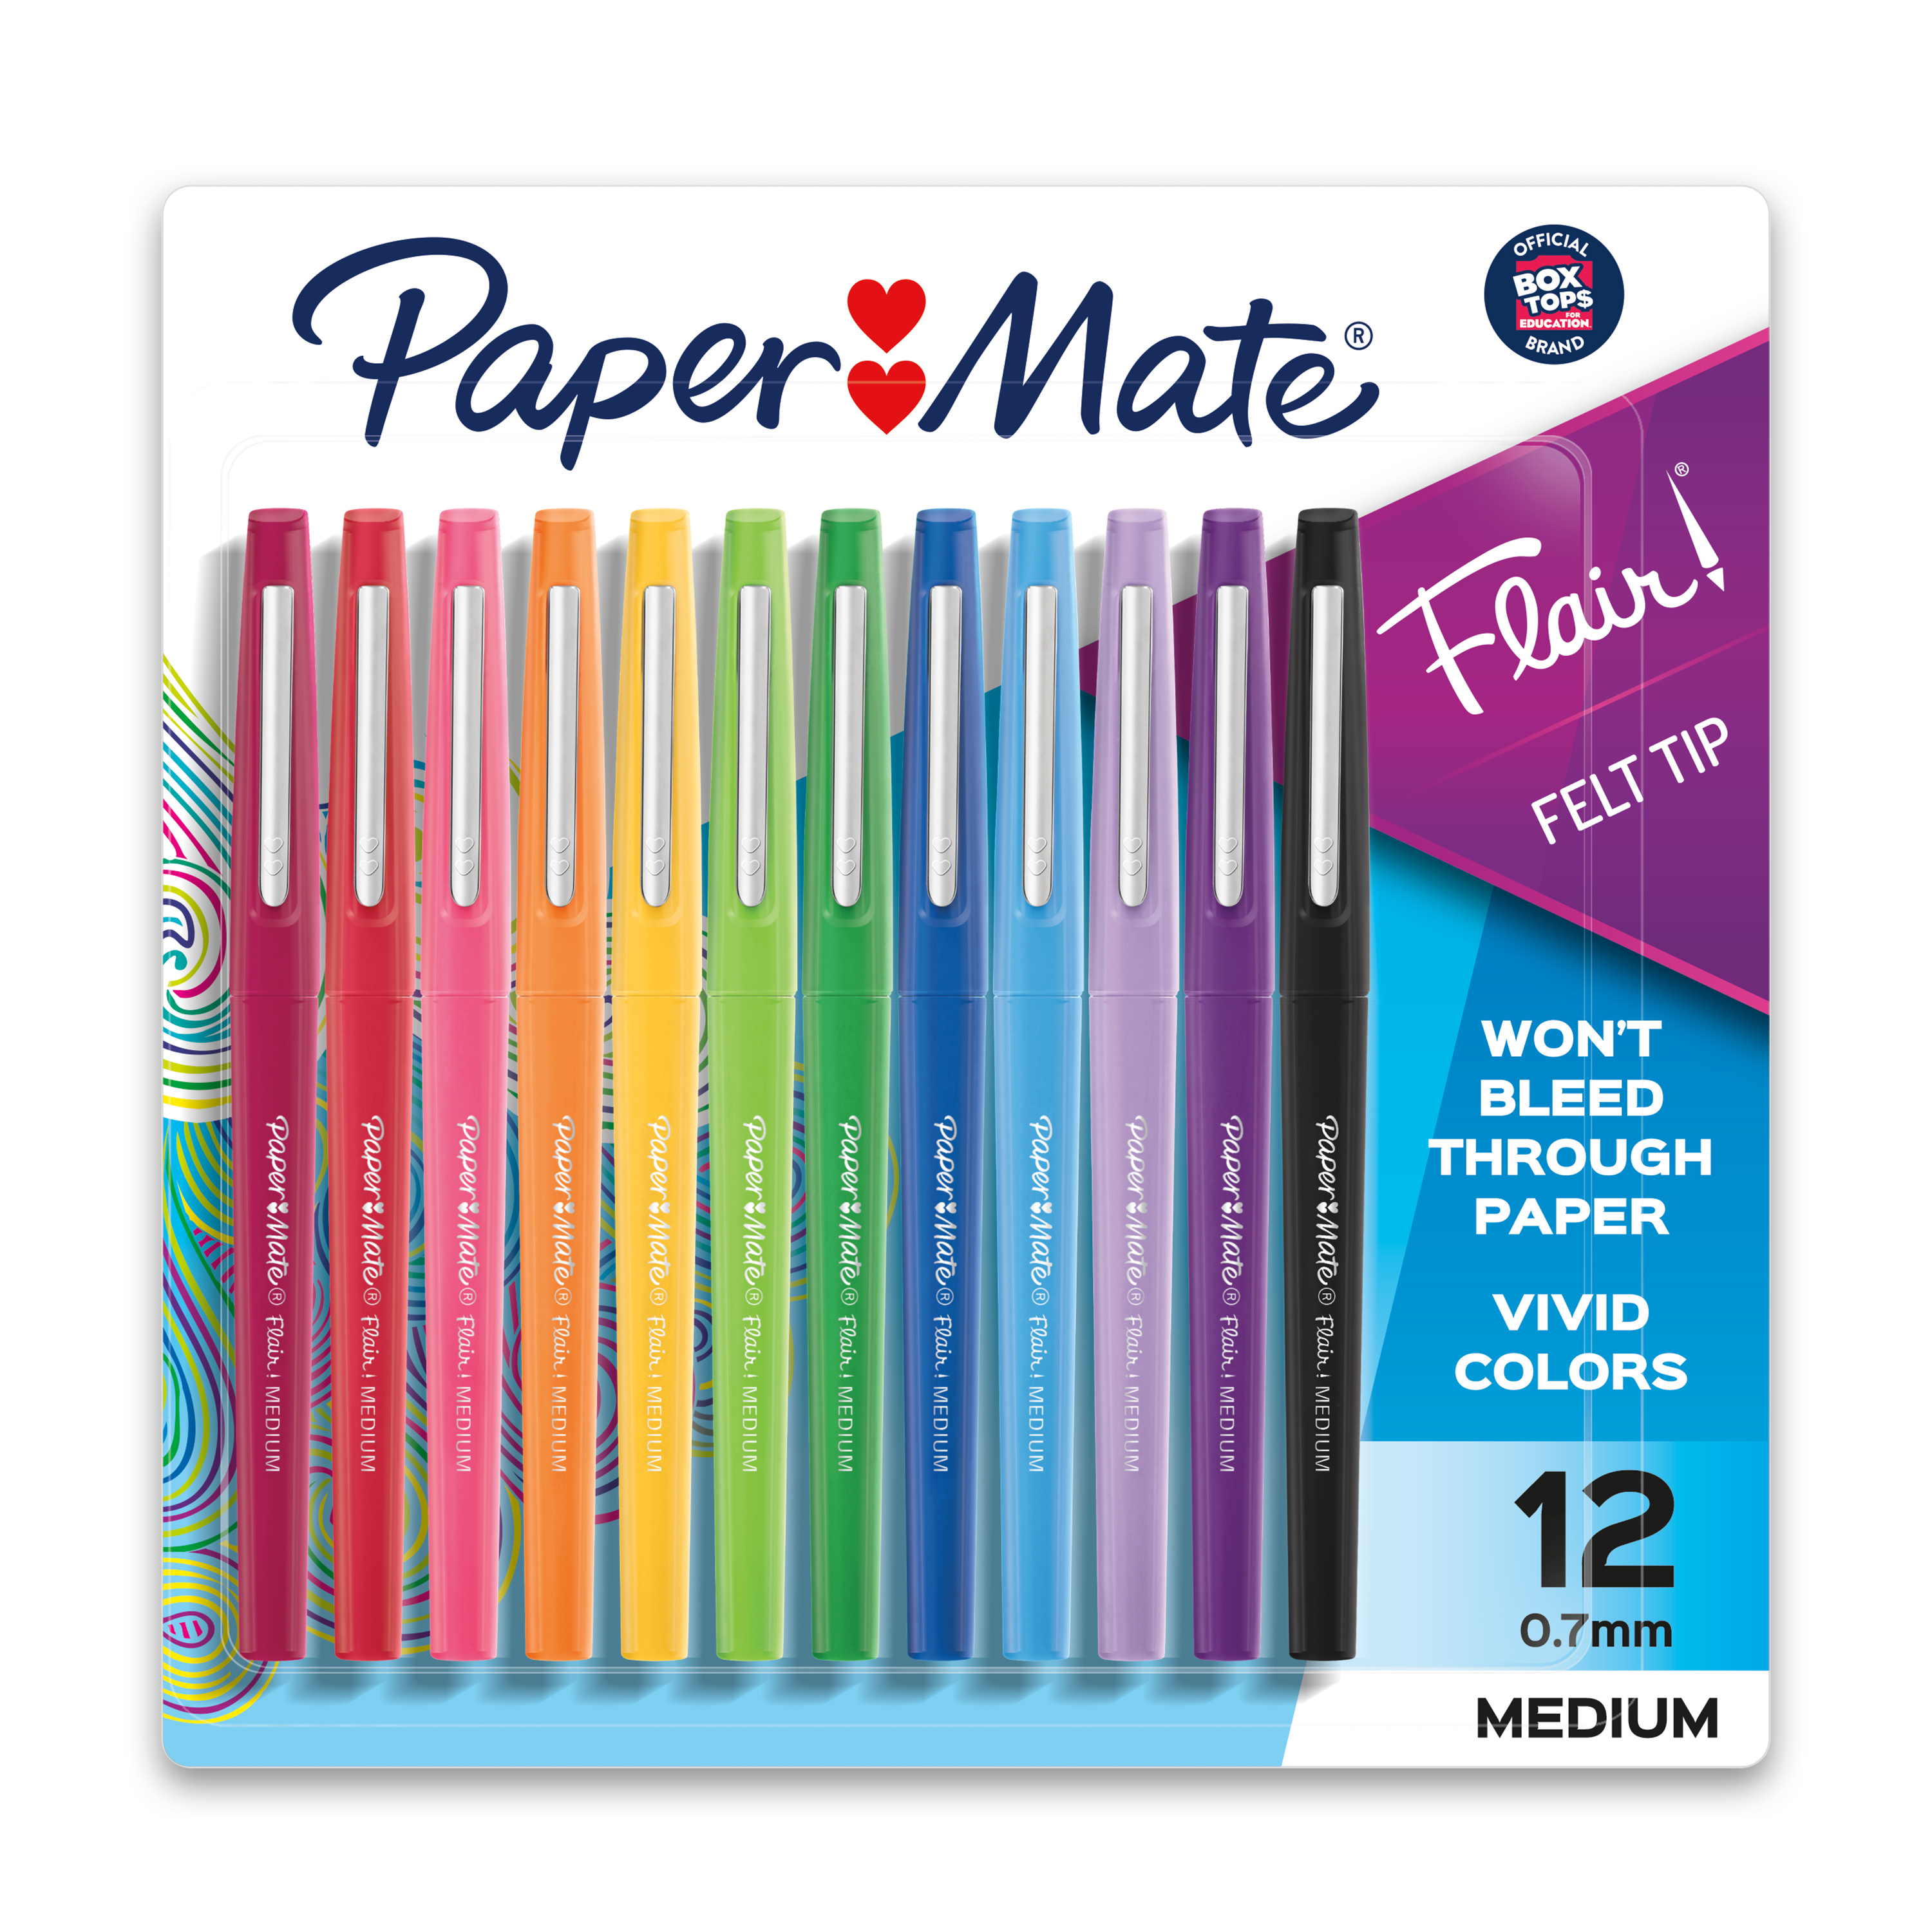 Paper Mate Flair Felt Tip Pen Set, 0.7mm, 12 Count - image 1 of 10